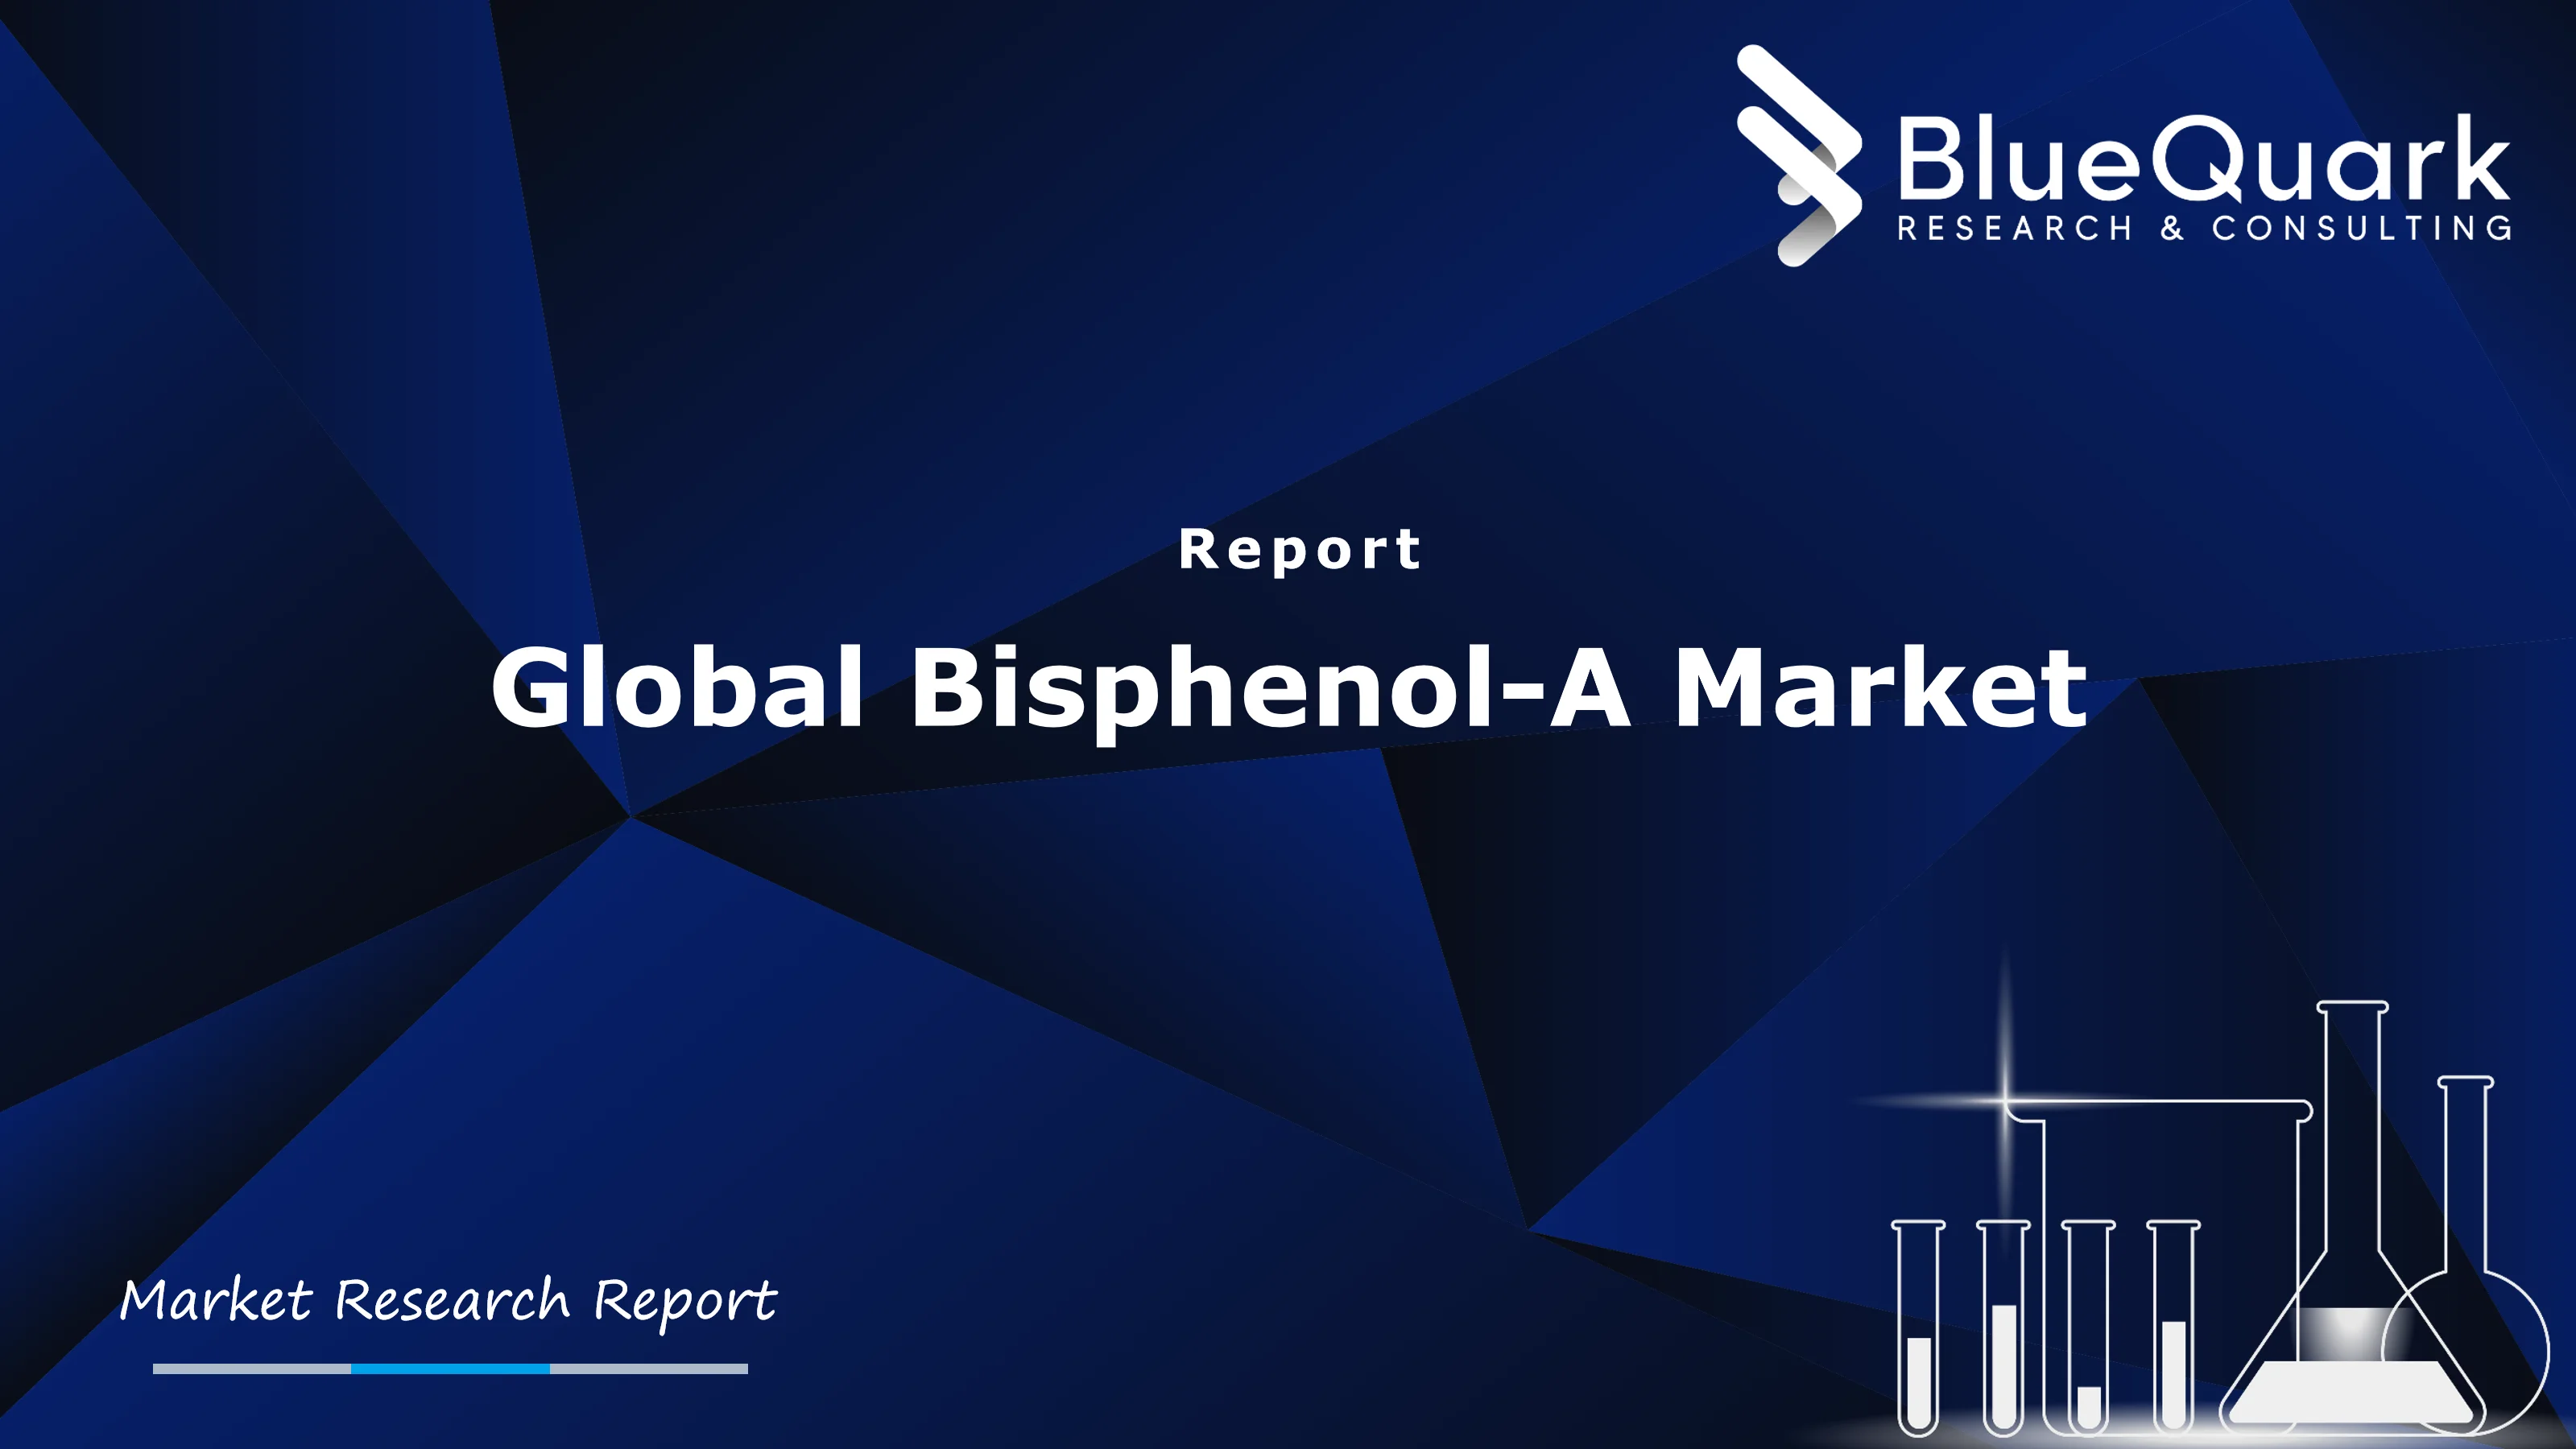 Global Bisphenol-A Market Outlook to 2029